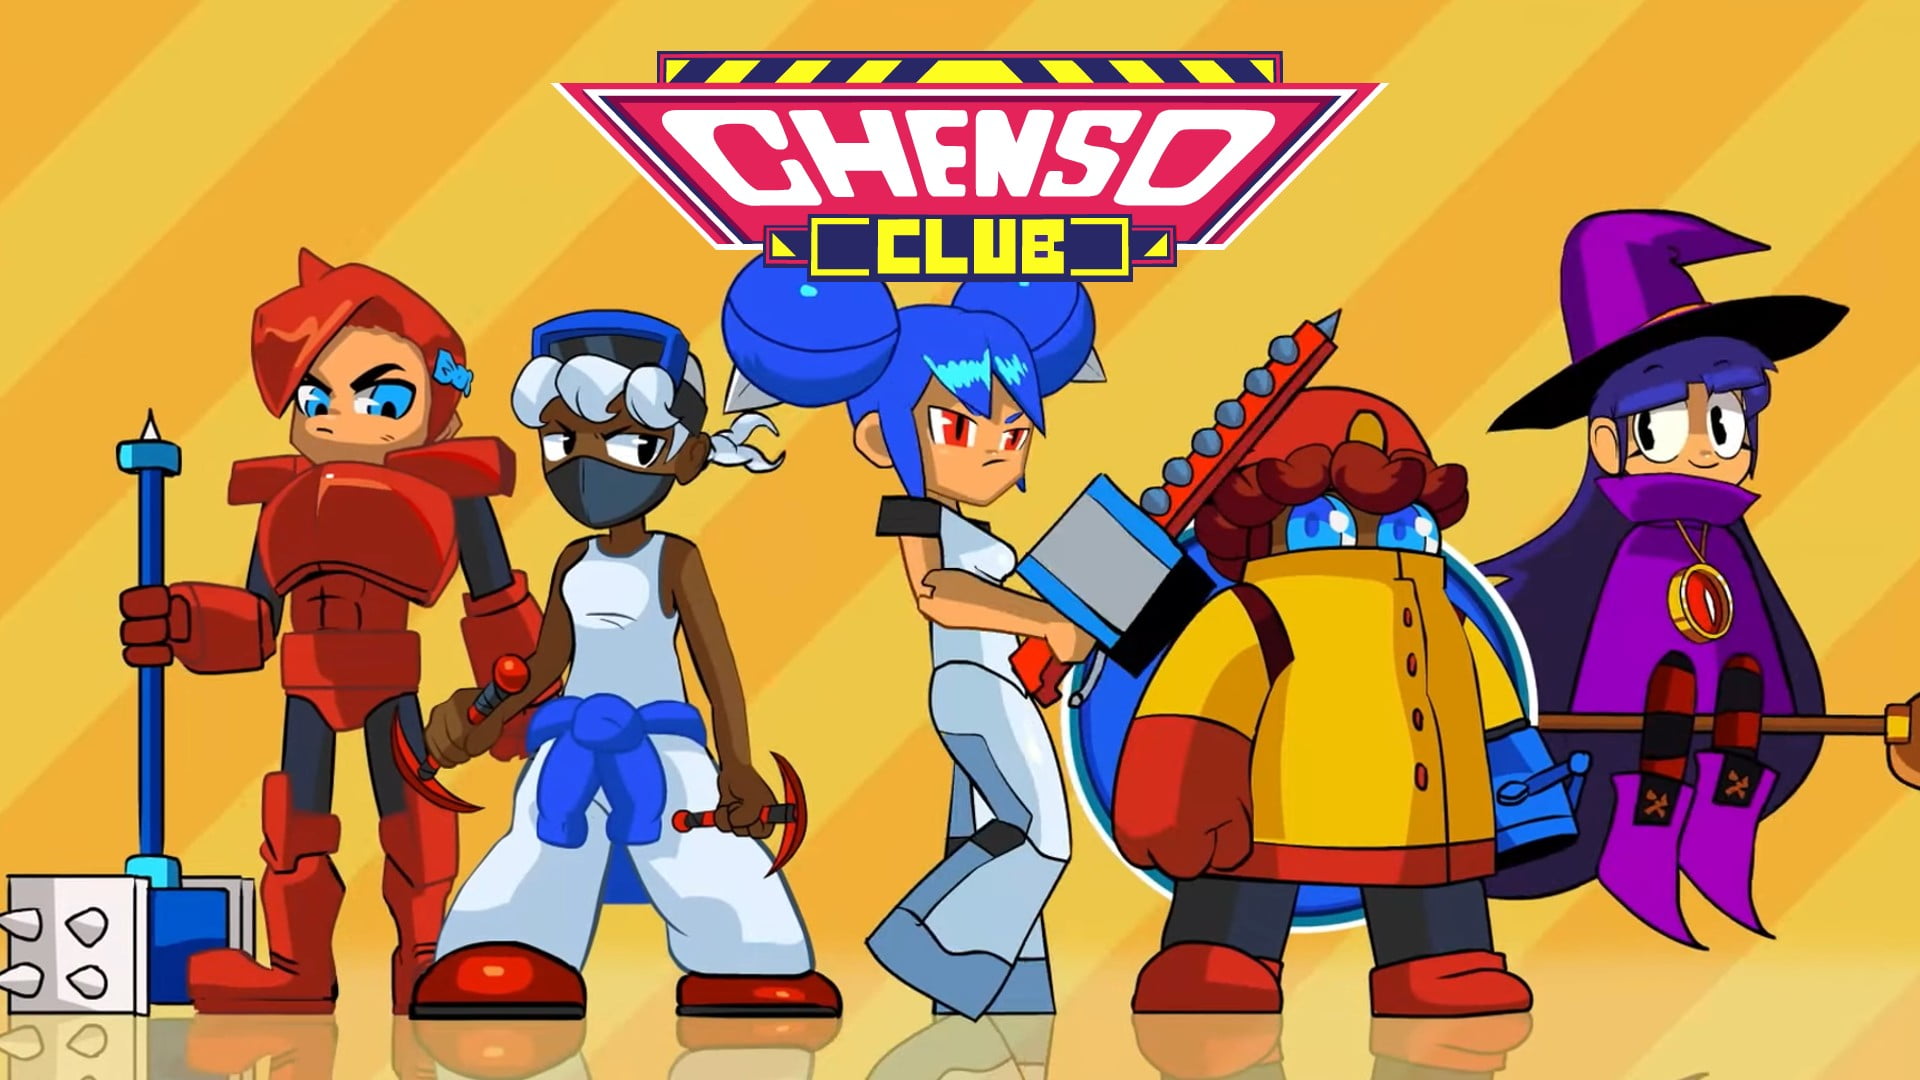 Chenso Club on Steam